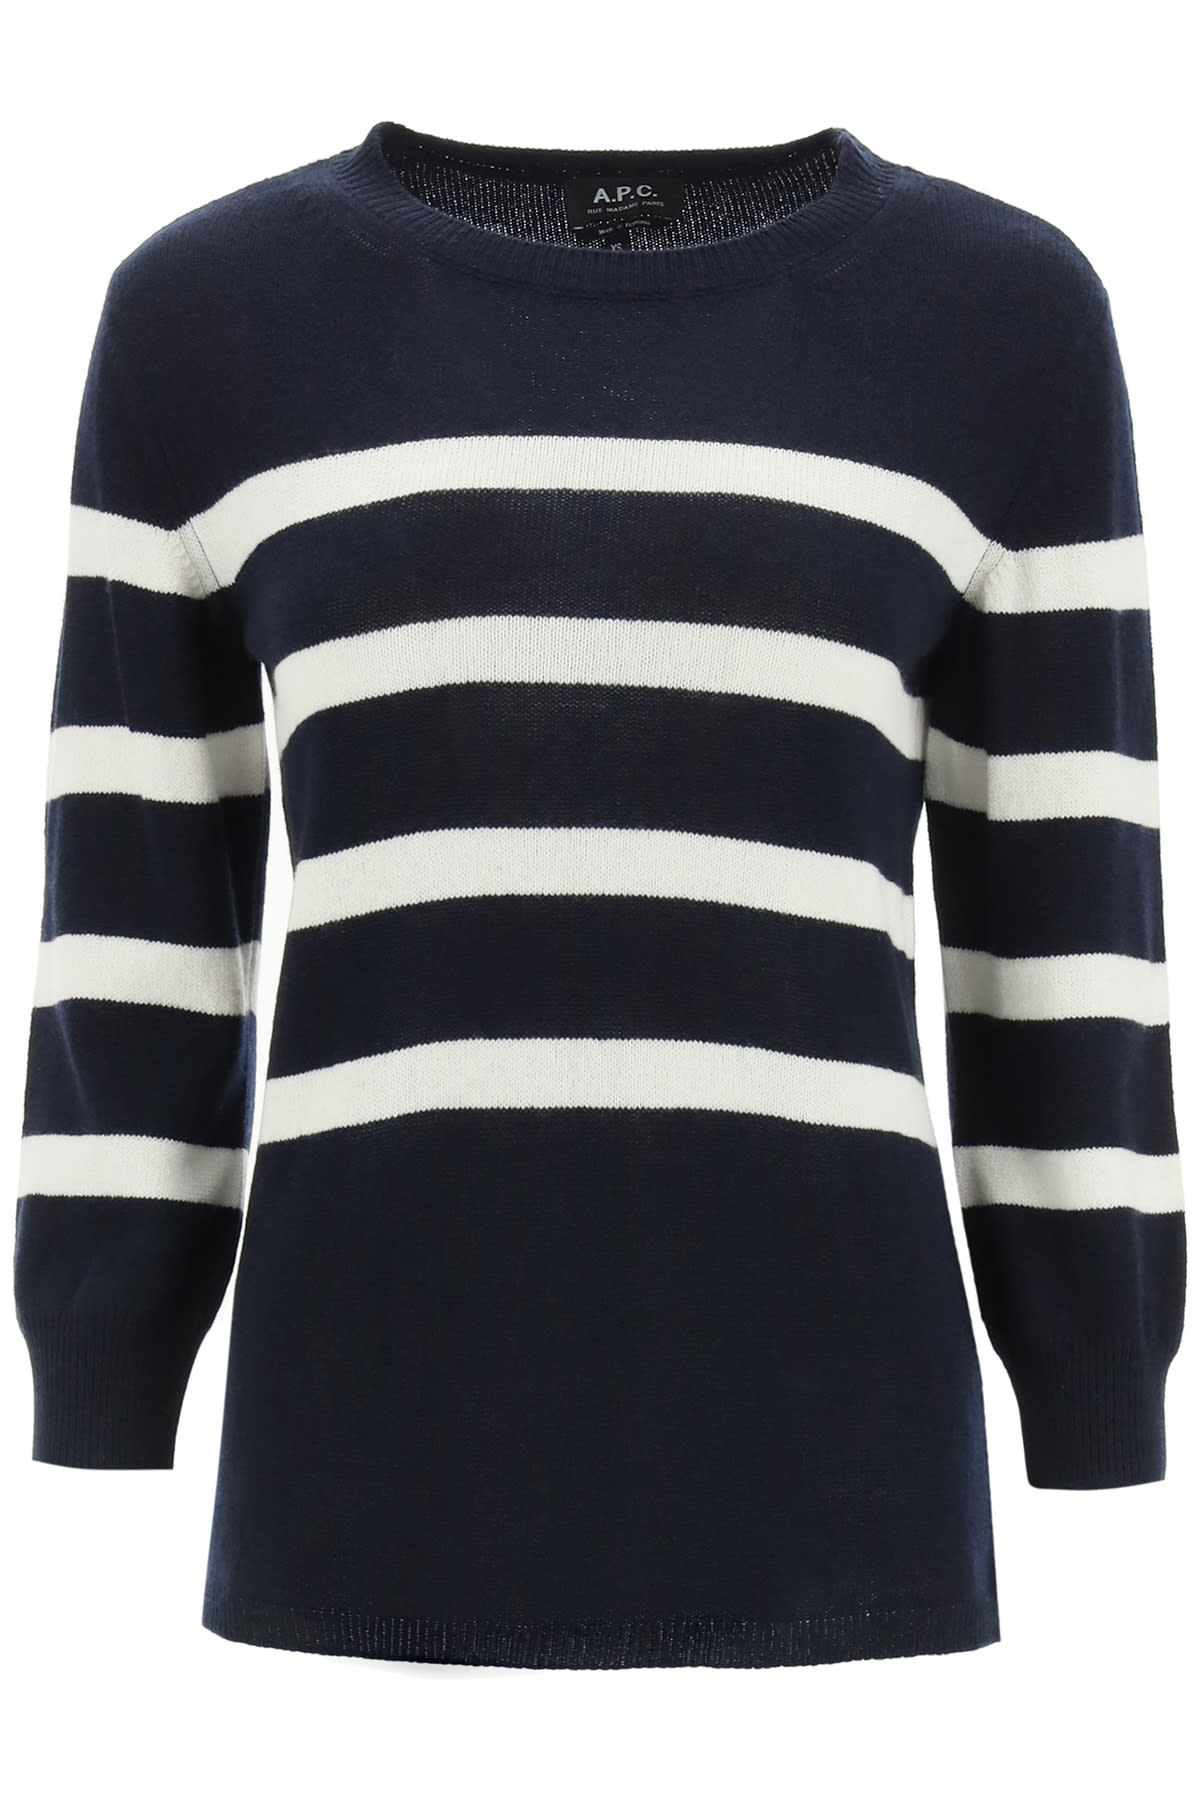 A.P.C. Lizzy Striped Sweater